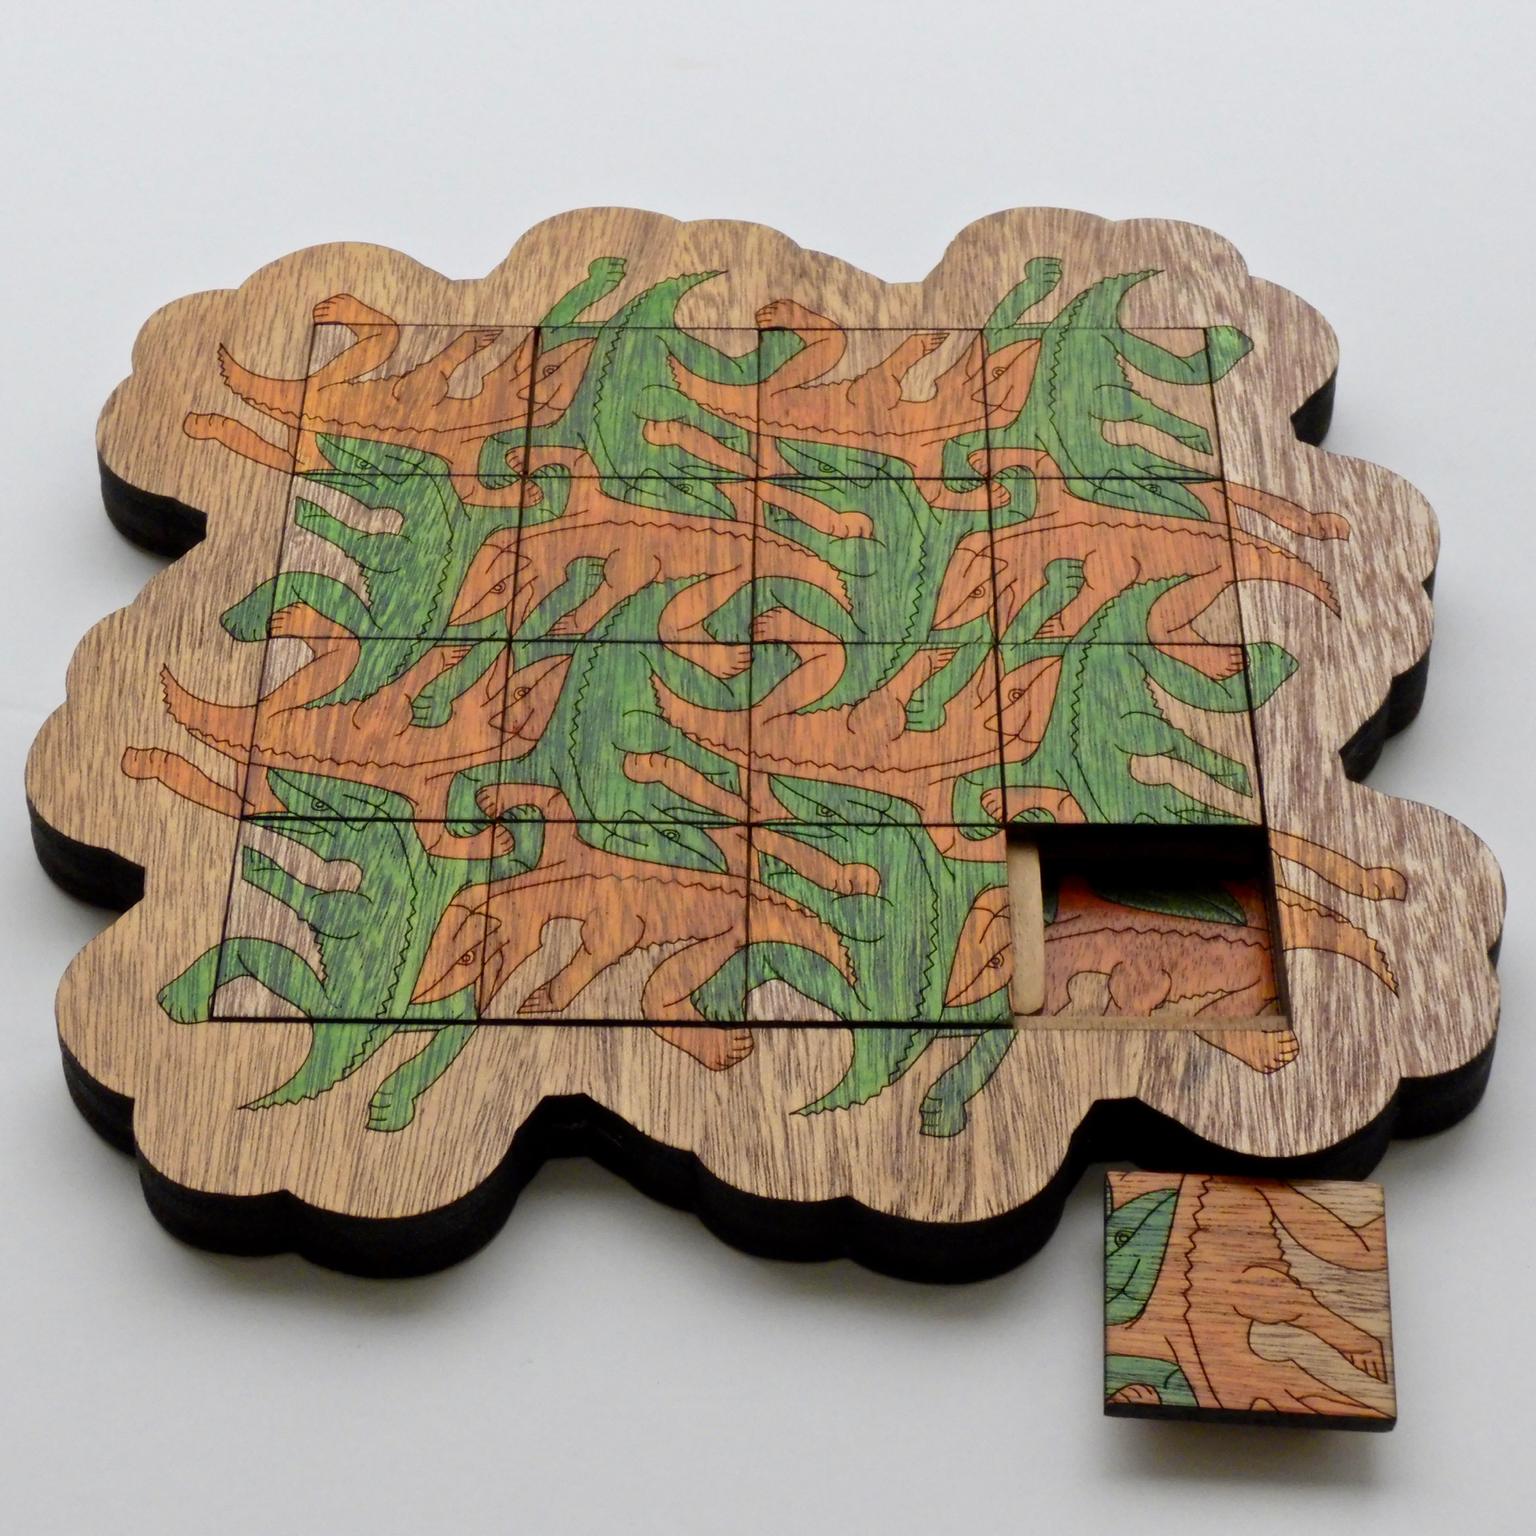 Image for entry 'Escher 15 Lizards Sliding 15 Puzzle'